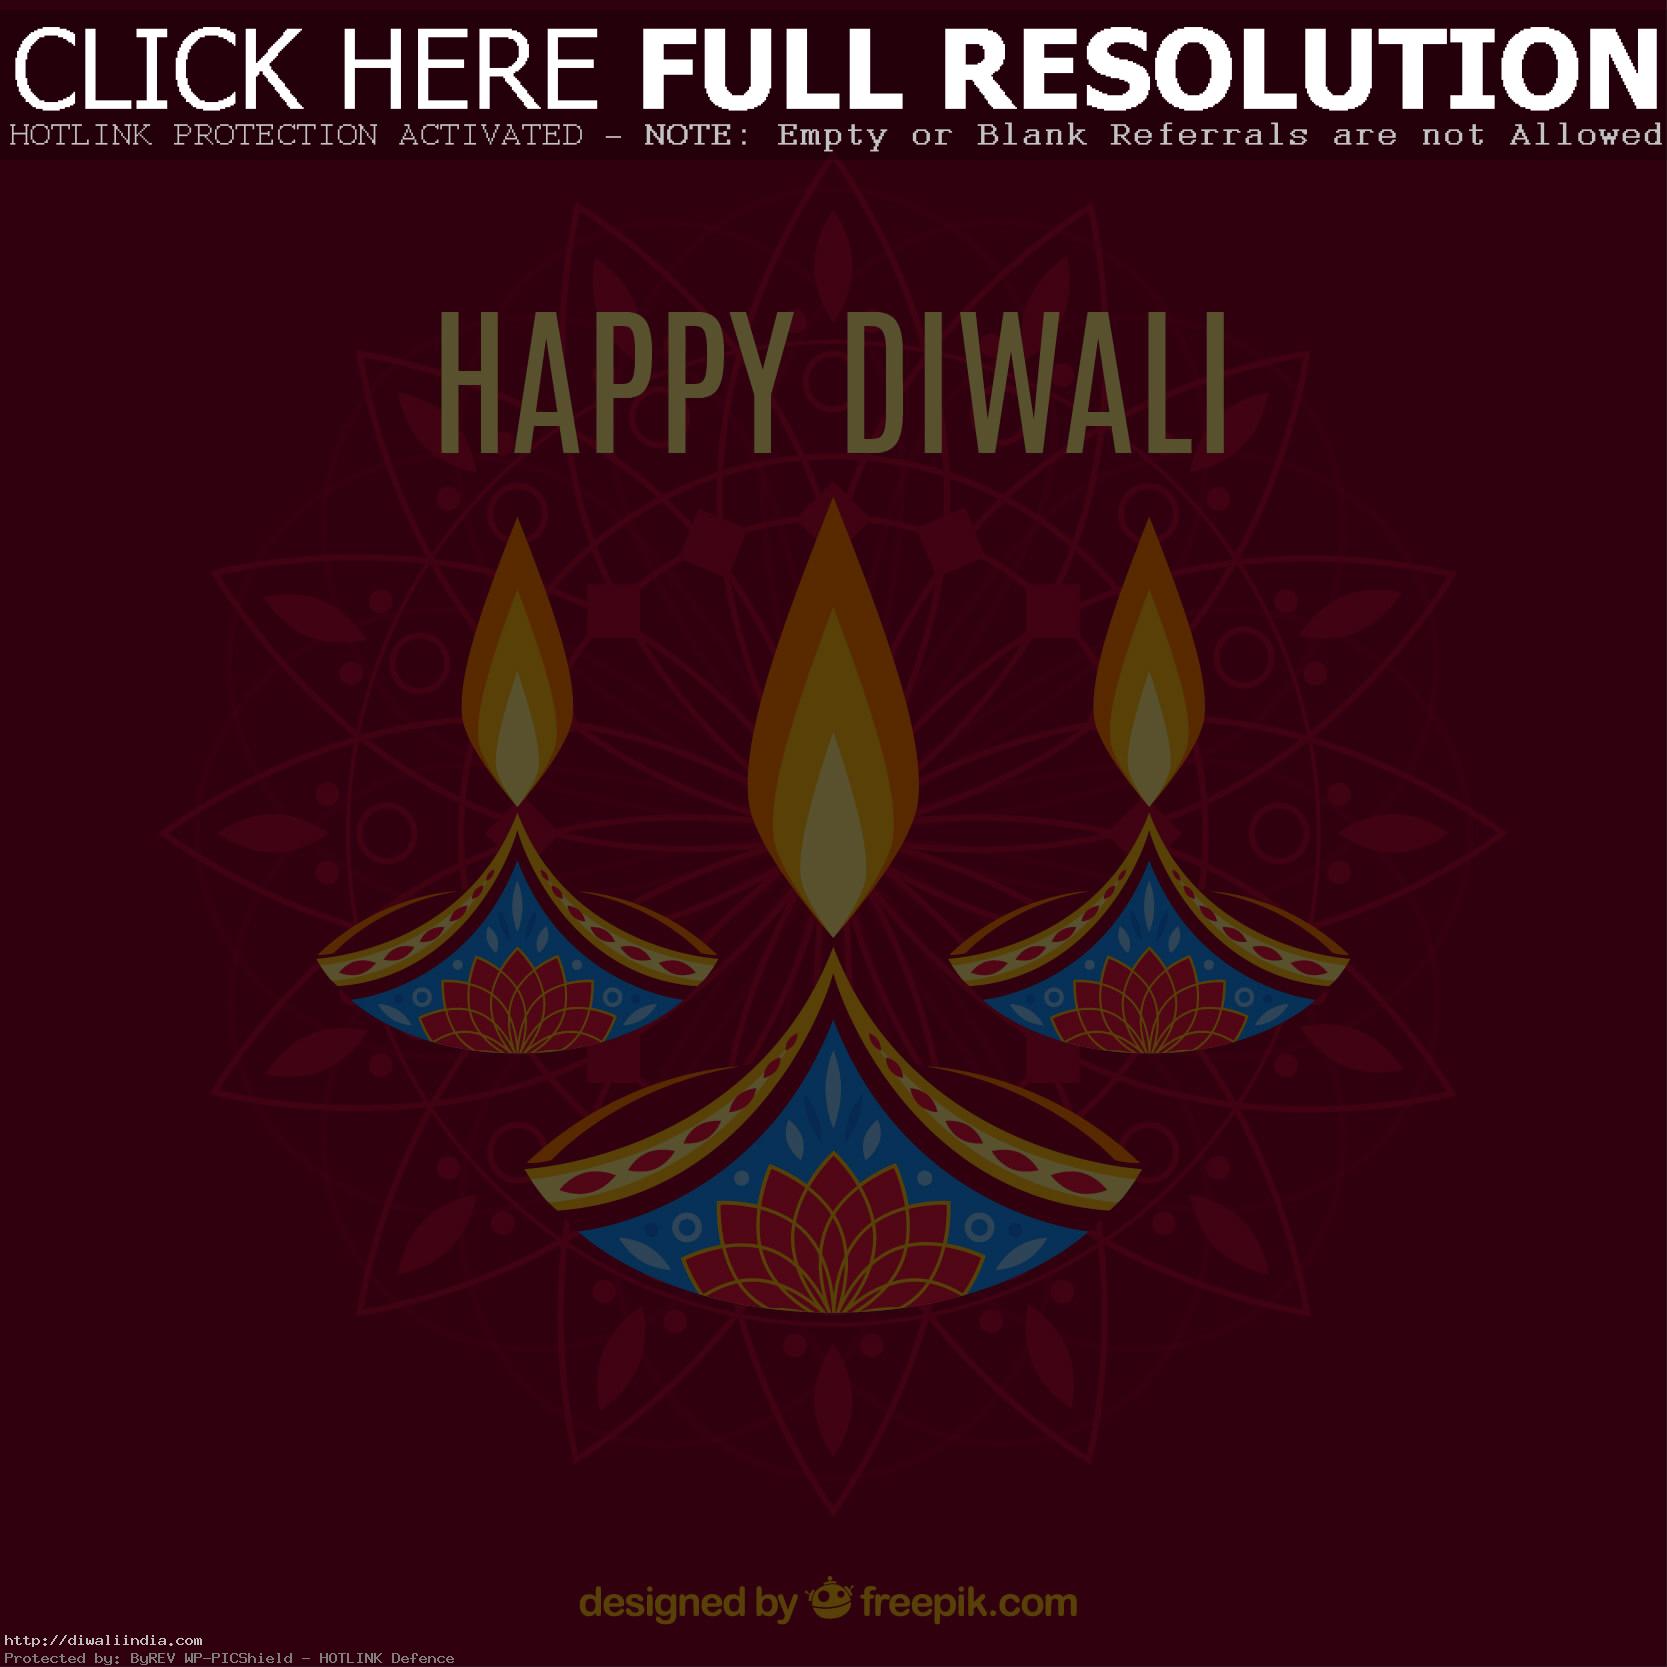 Happy Diwali images